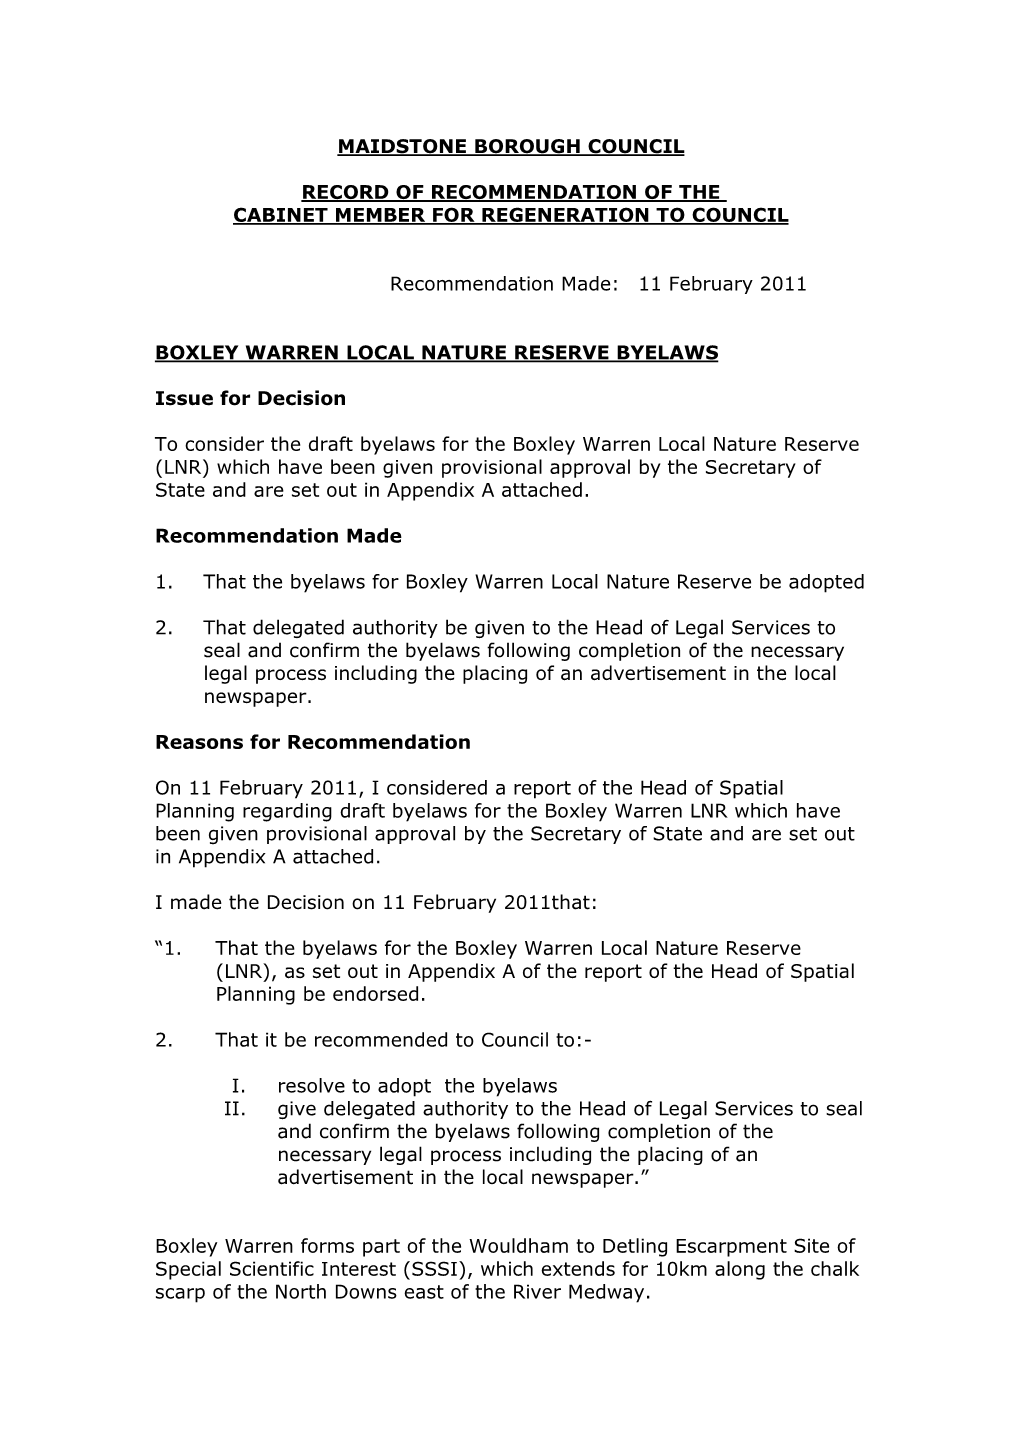 Maidstone Borough Council Record of Recommendation